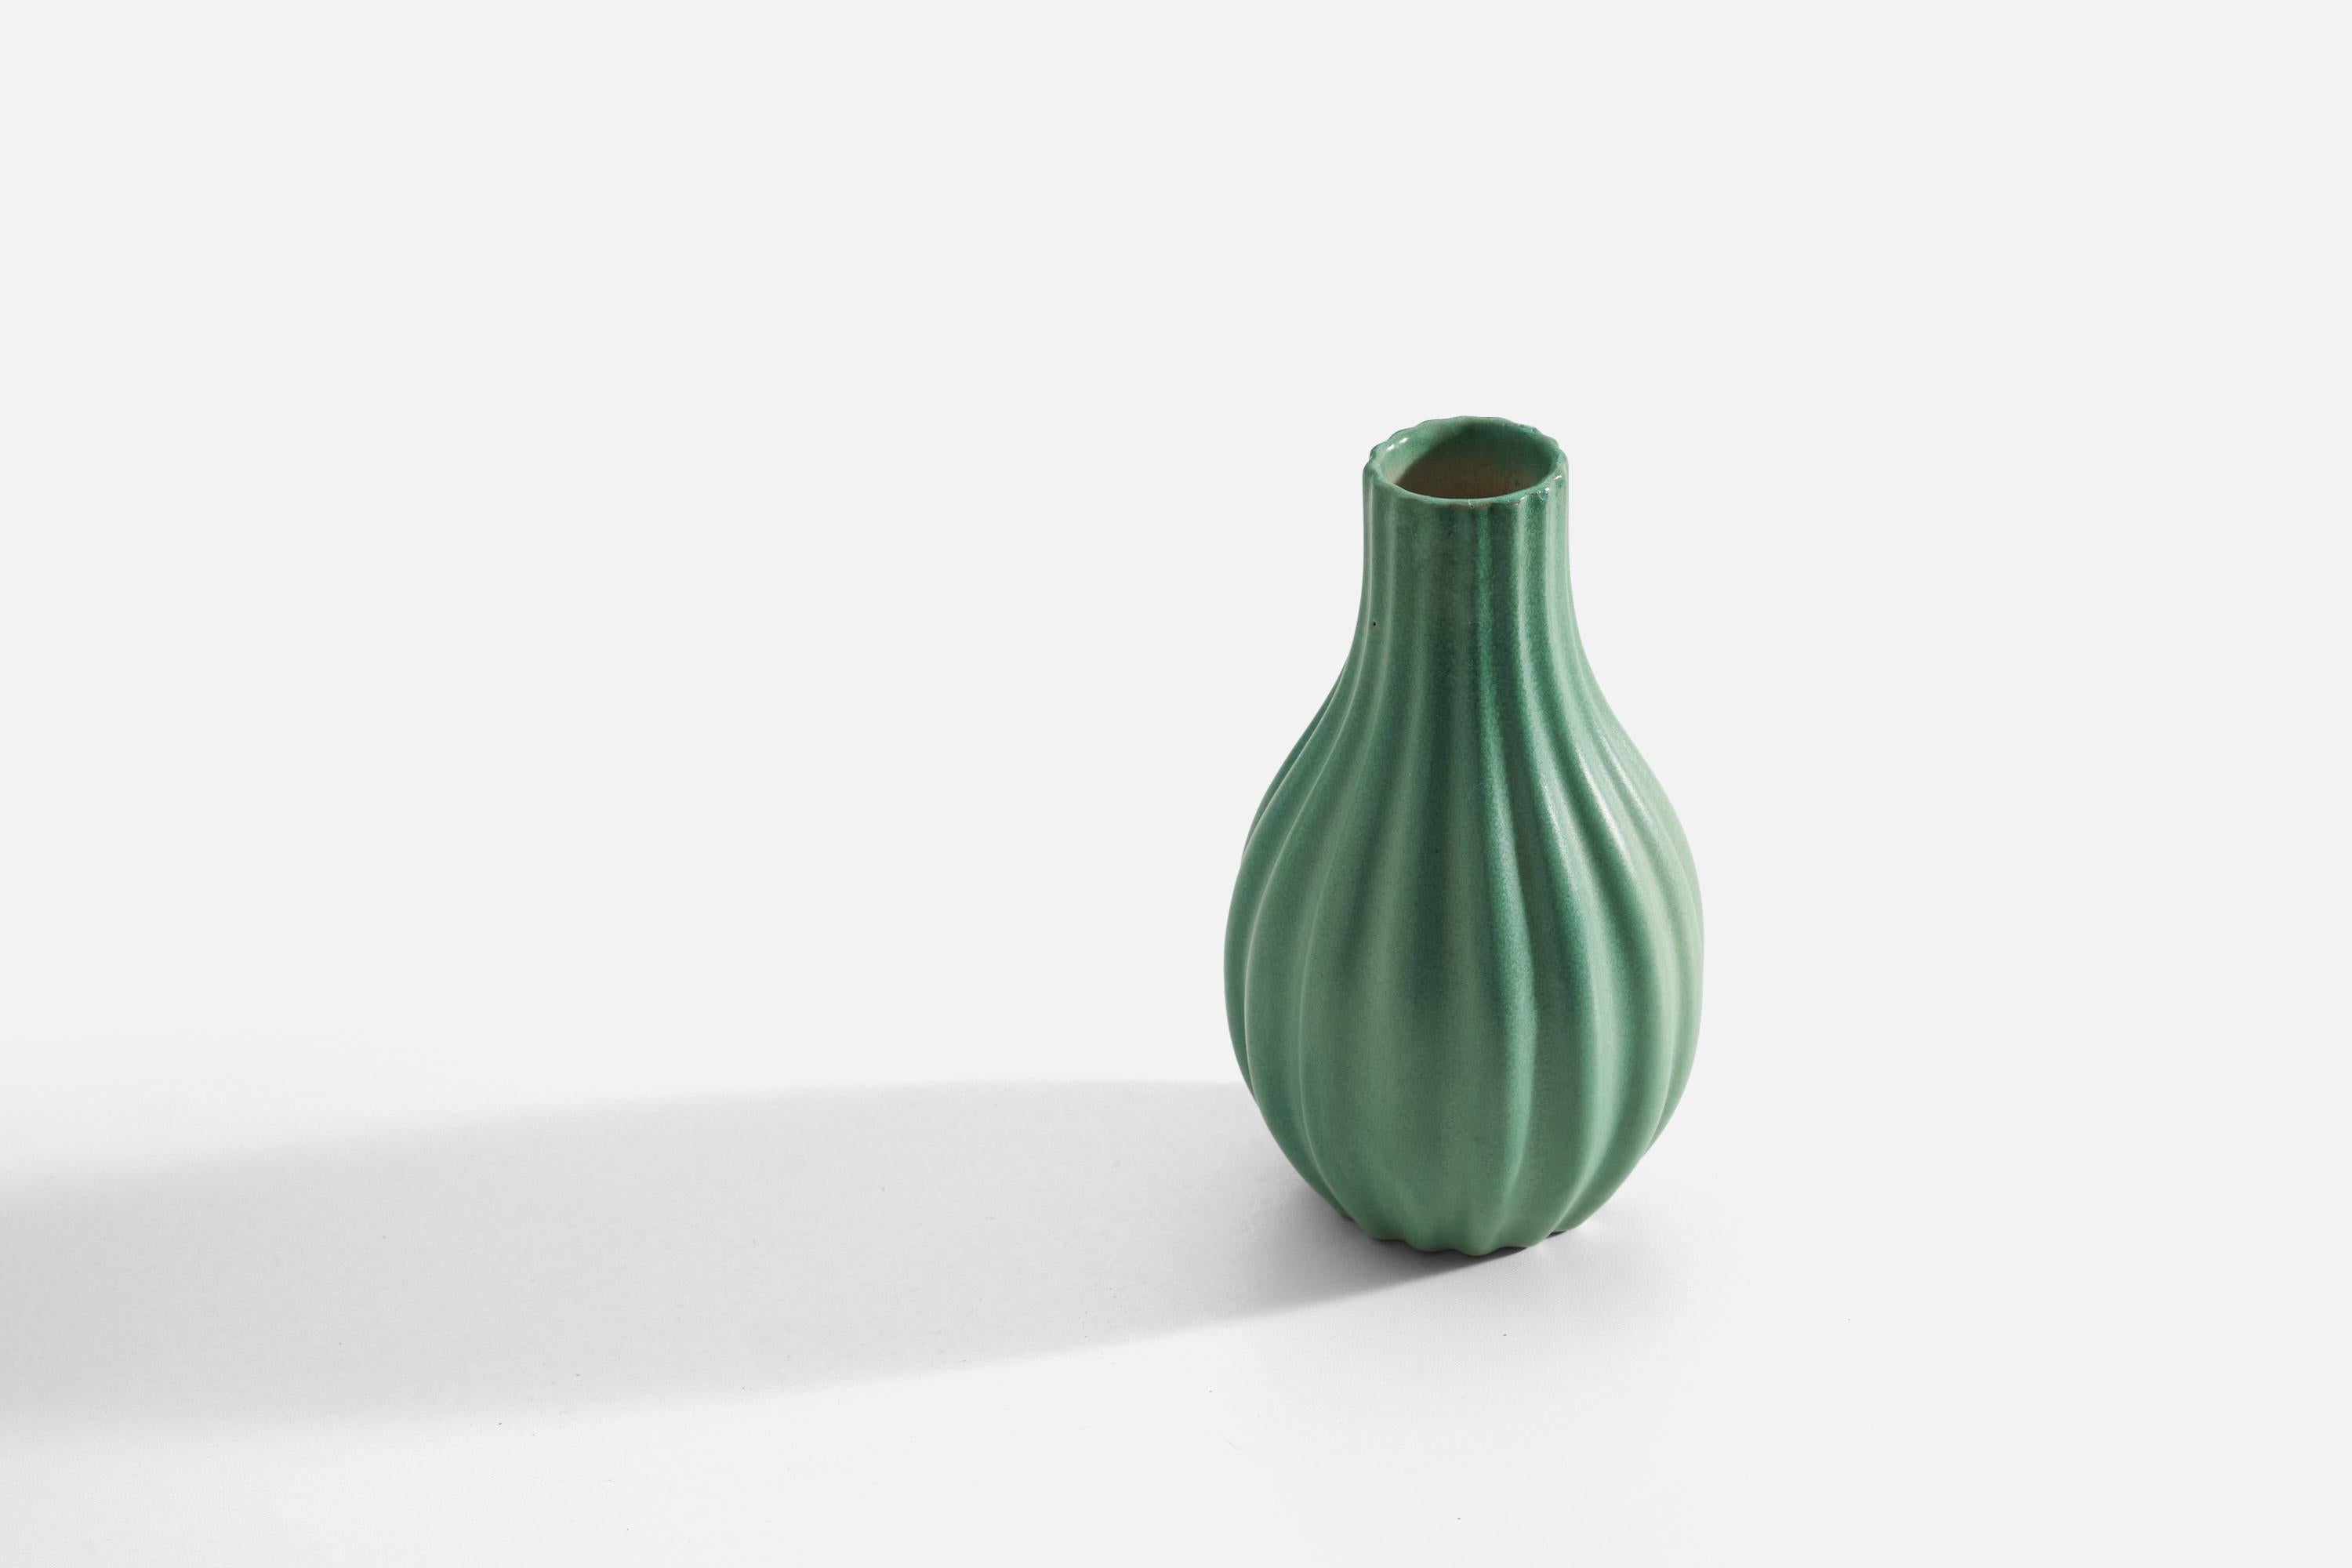 A green-glazed earthenware vase. Designed and produced by Upsala-Ekeby, Sweden, 1940s.

